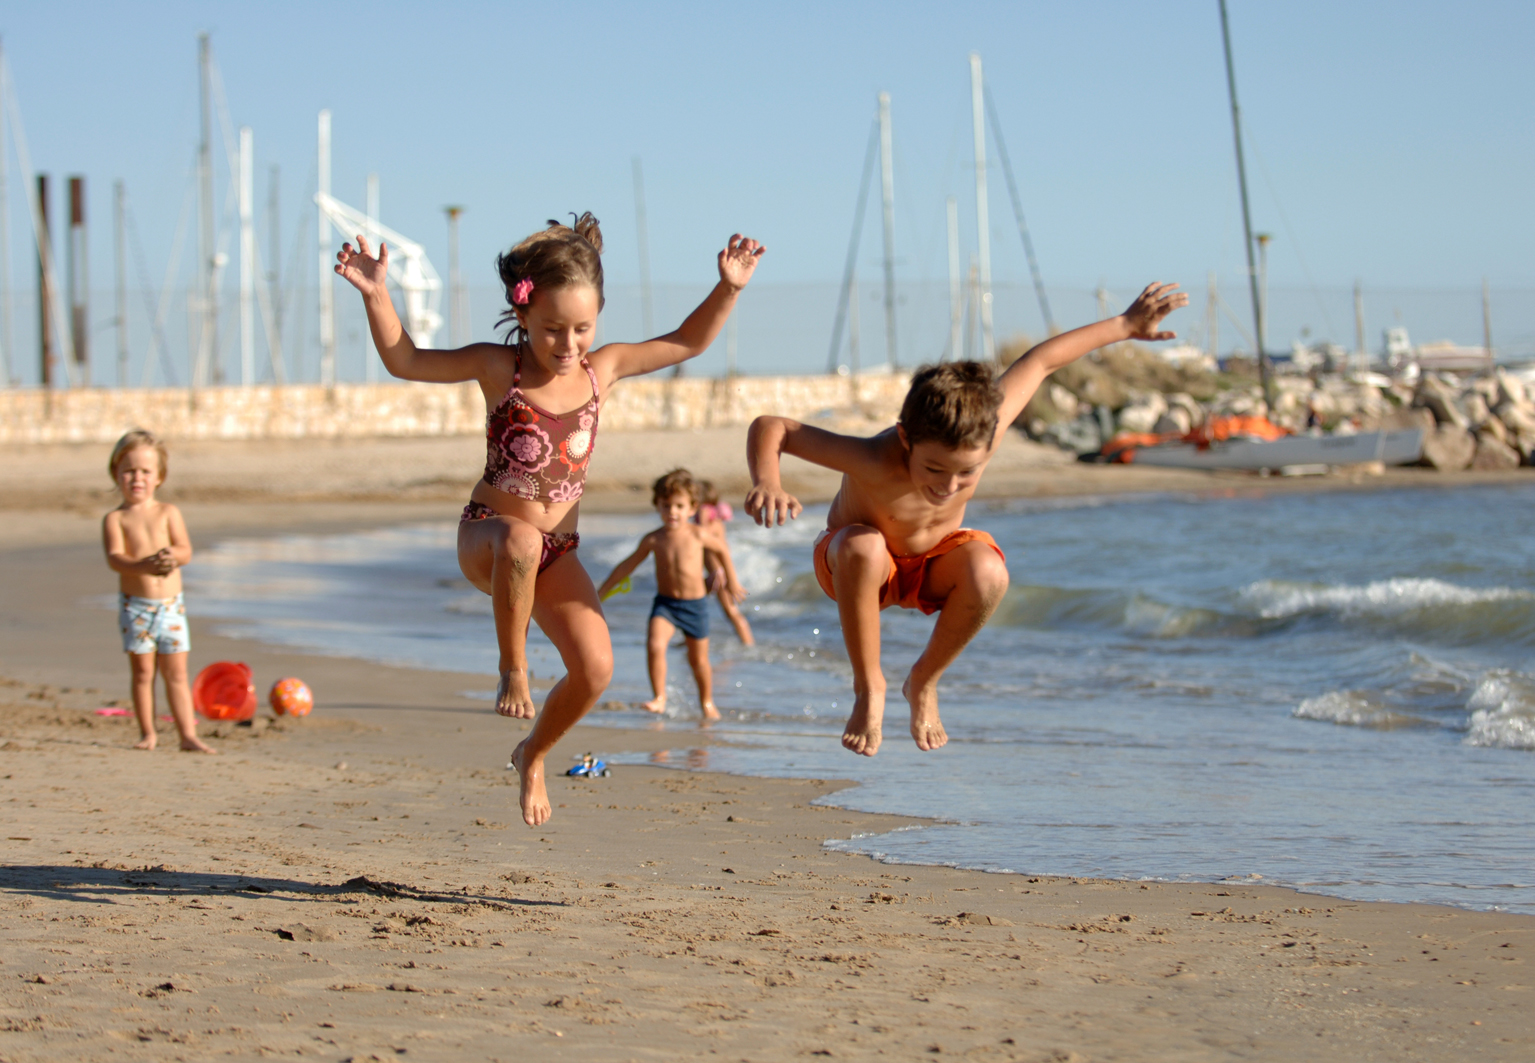 Fkk kids. Детишки на пляже. Детские пляжи. Ребятишки на пляже. Детский пляж.